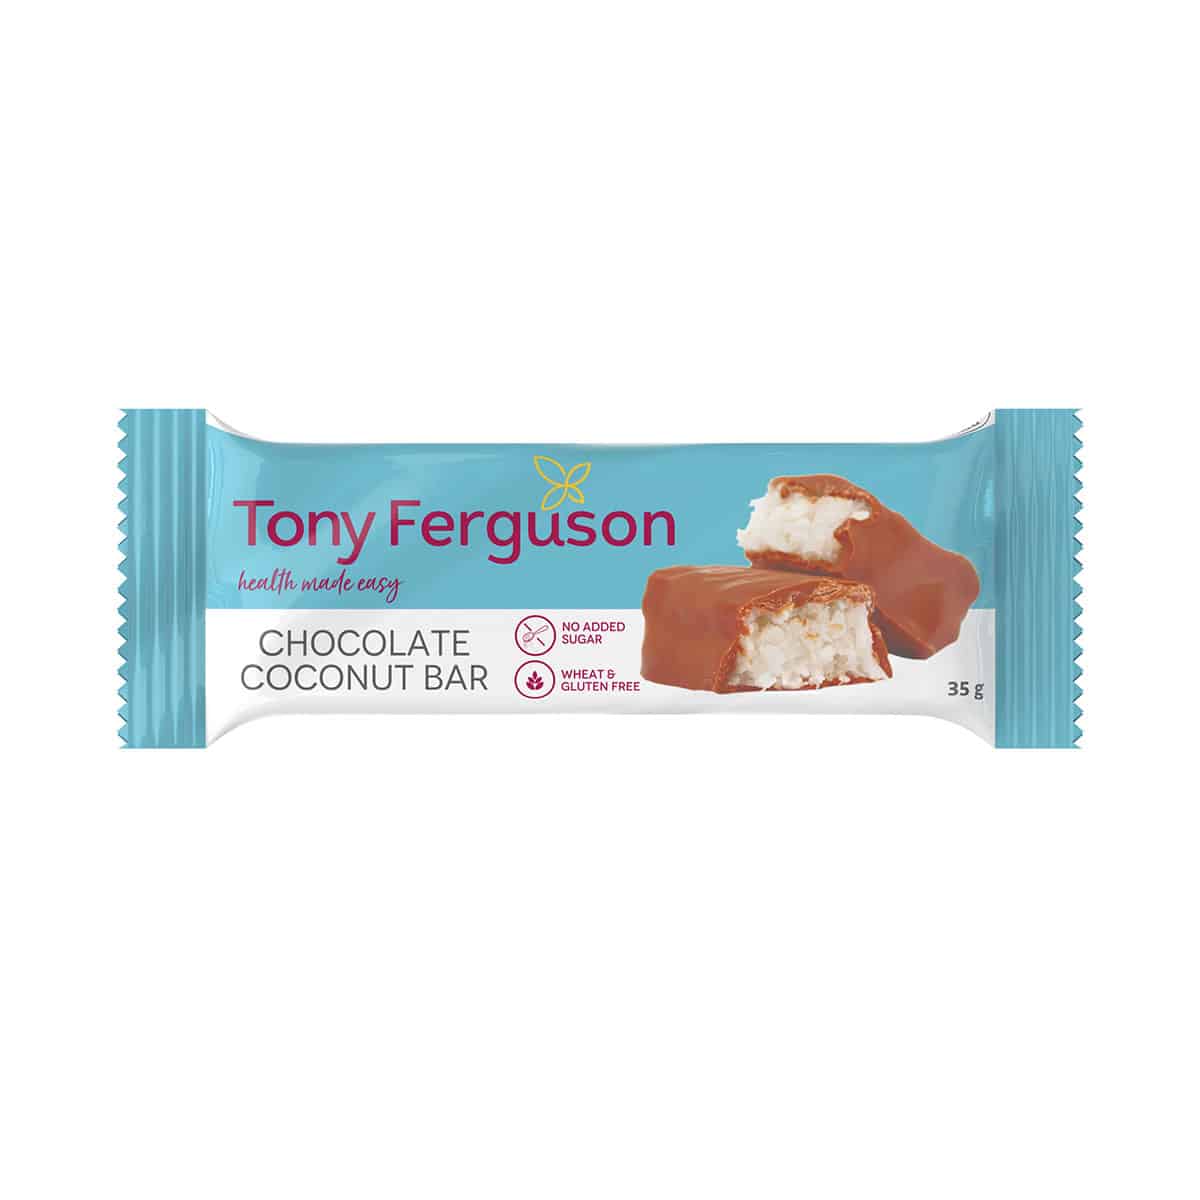 Tony Ferguson Chocolate Coconut Bar - 35g